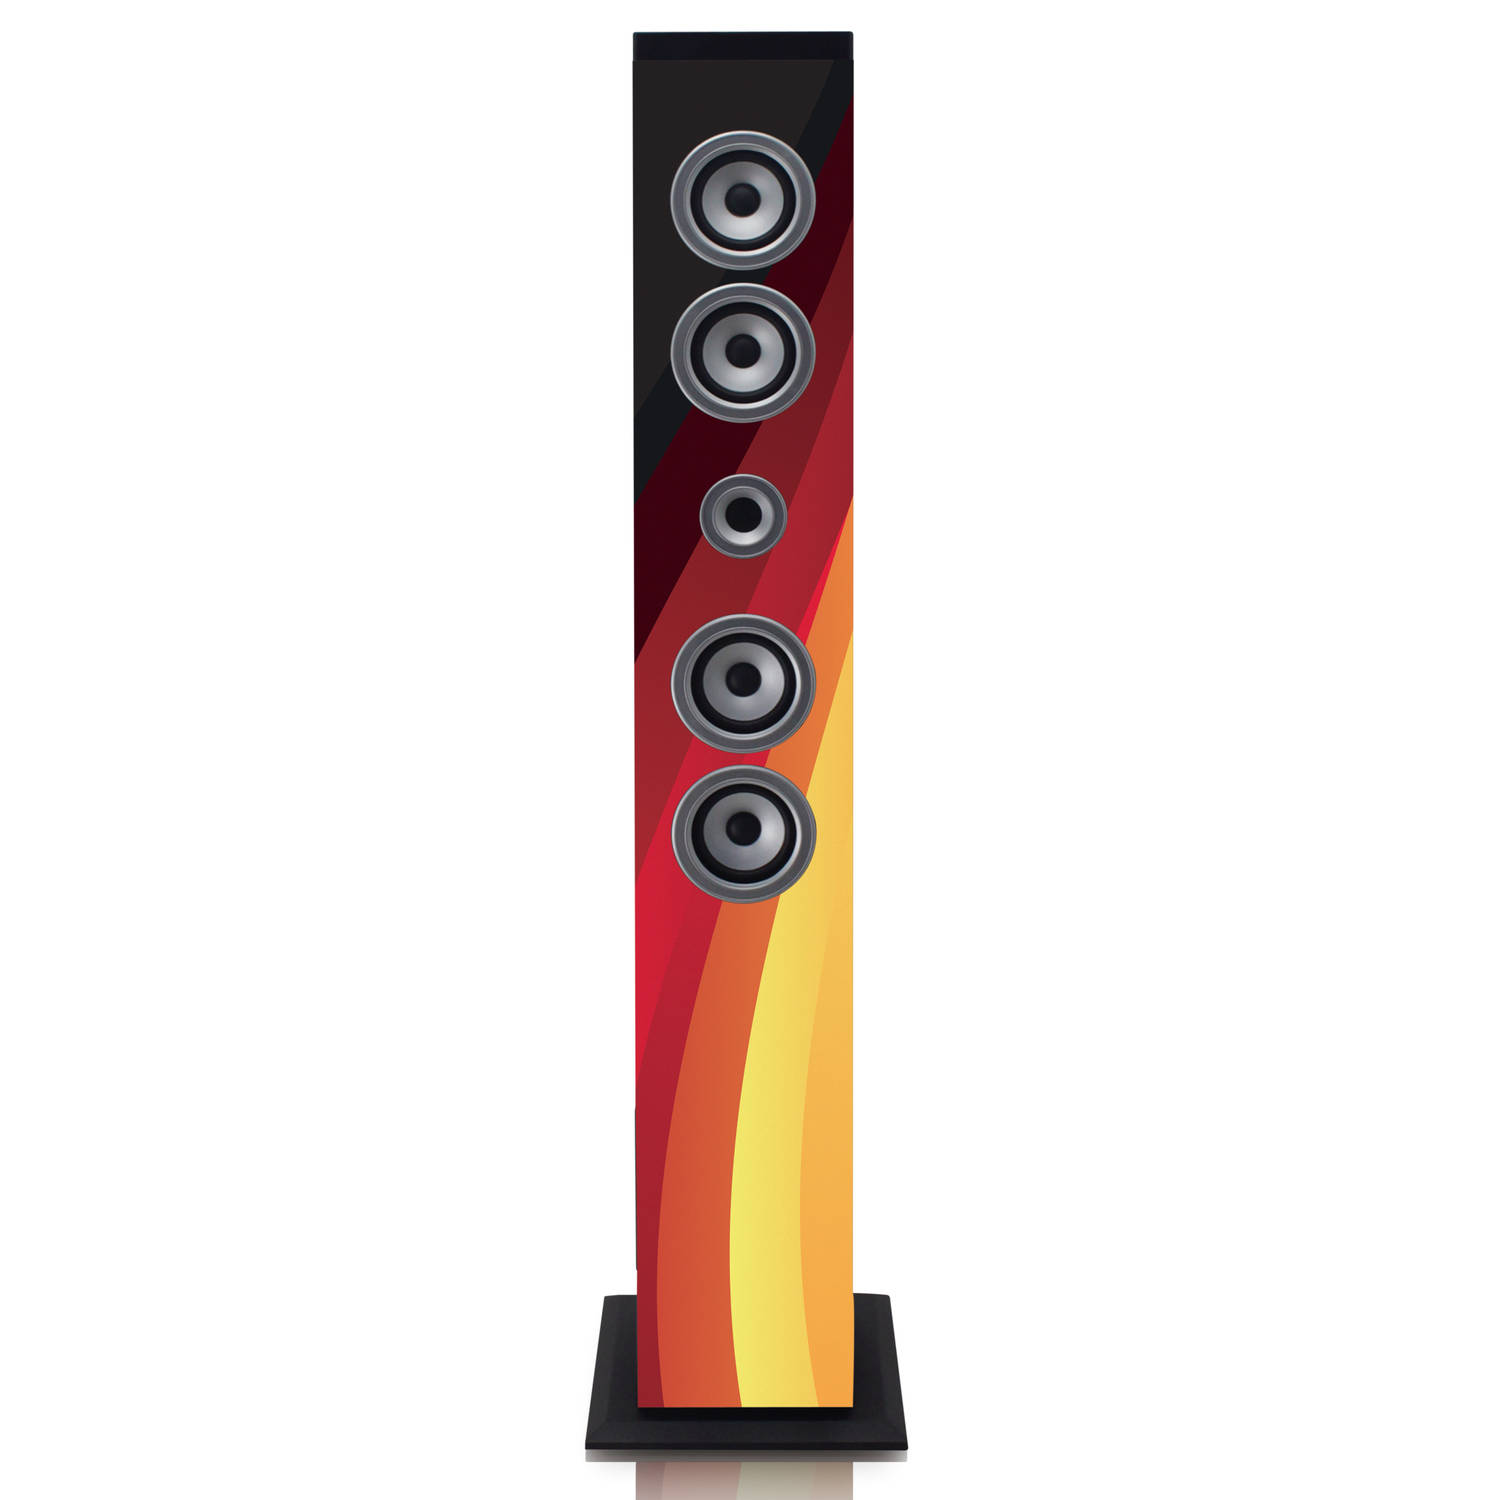 Ices IBT-6 Speaker toren met Bluetooth, FM Radio, USB- en SD speler - Duitse vlag Zwart-Rood-Goud